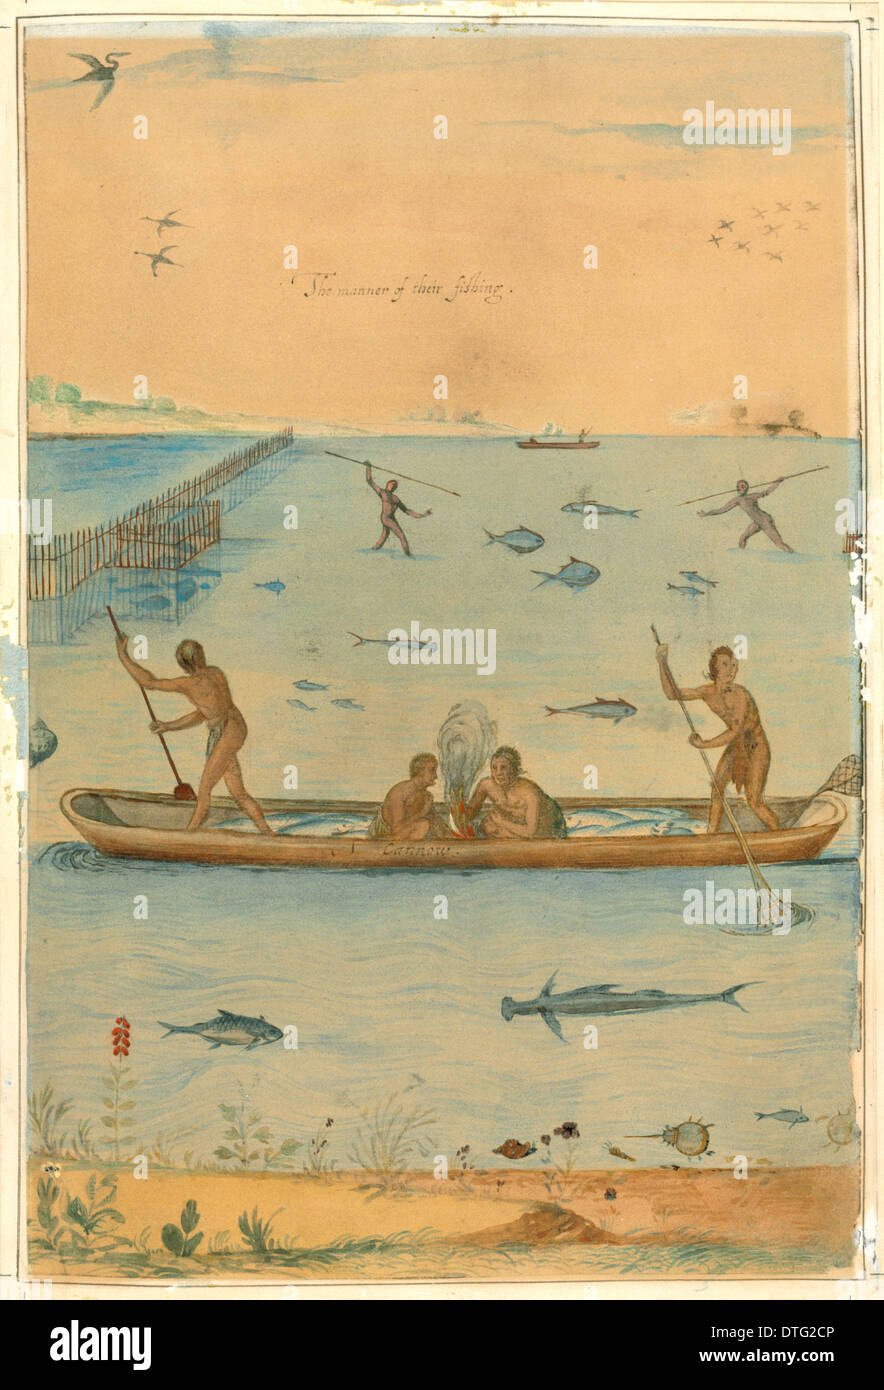 Native American fishing scene by John White, c.1580s. Stock Photo